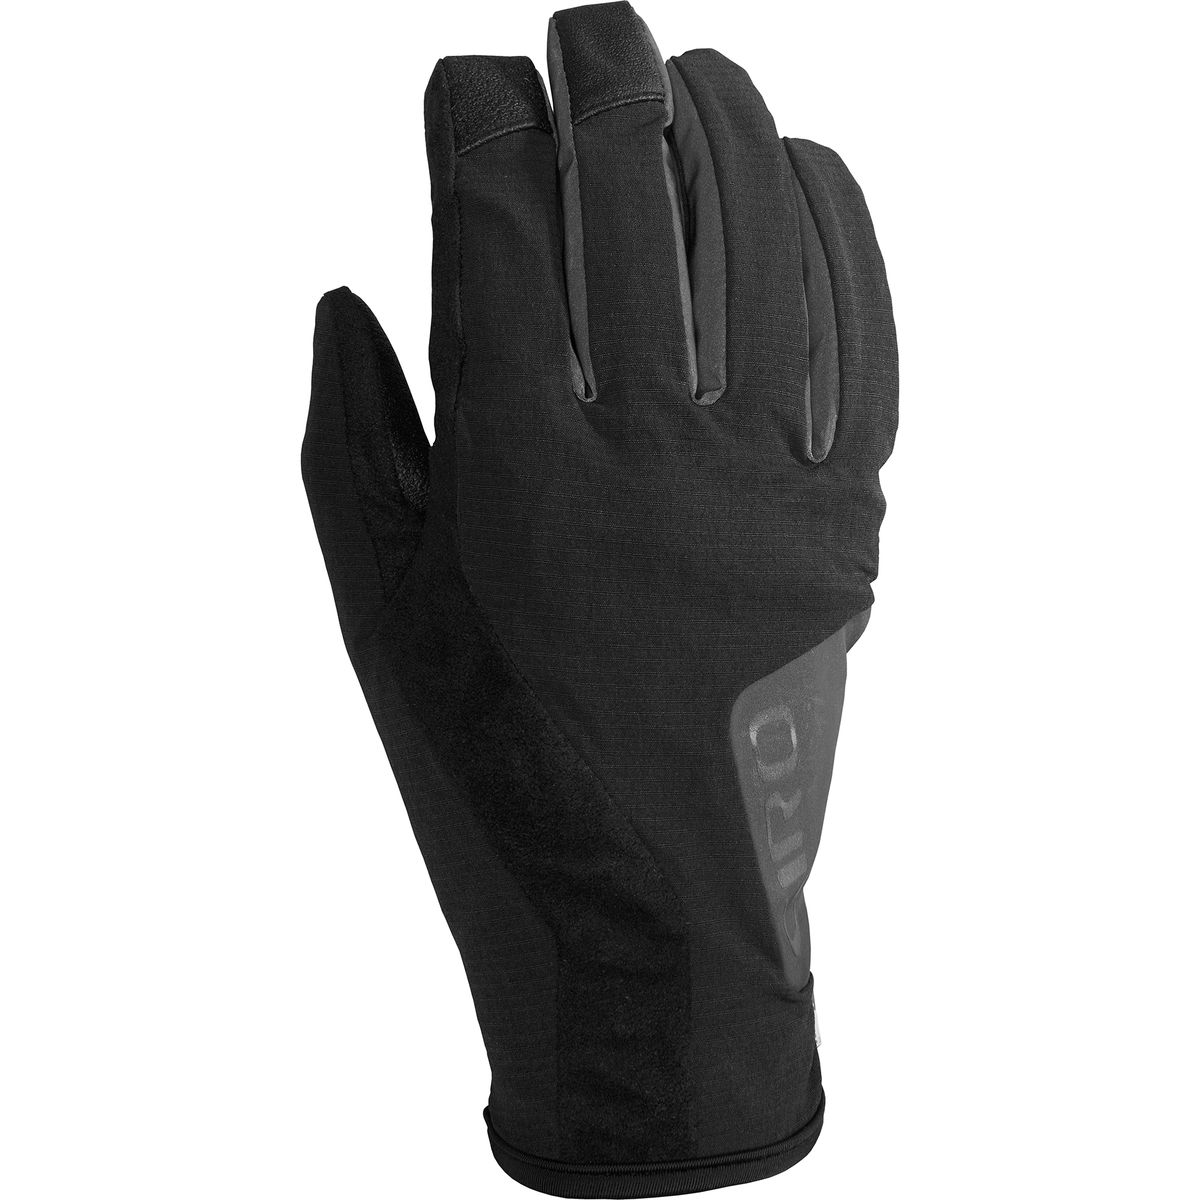 Giro Pivot II Glove - Men's Black, M